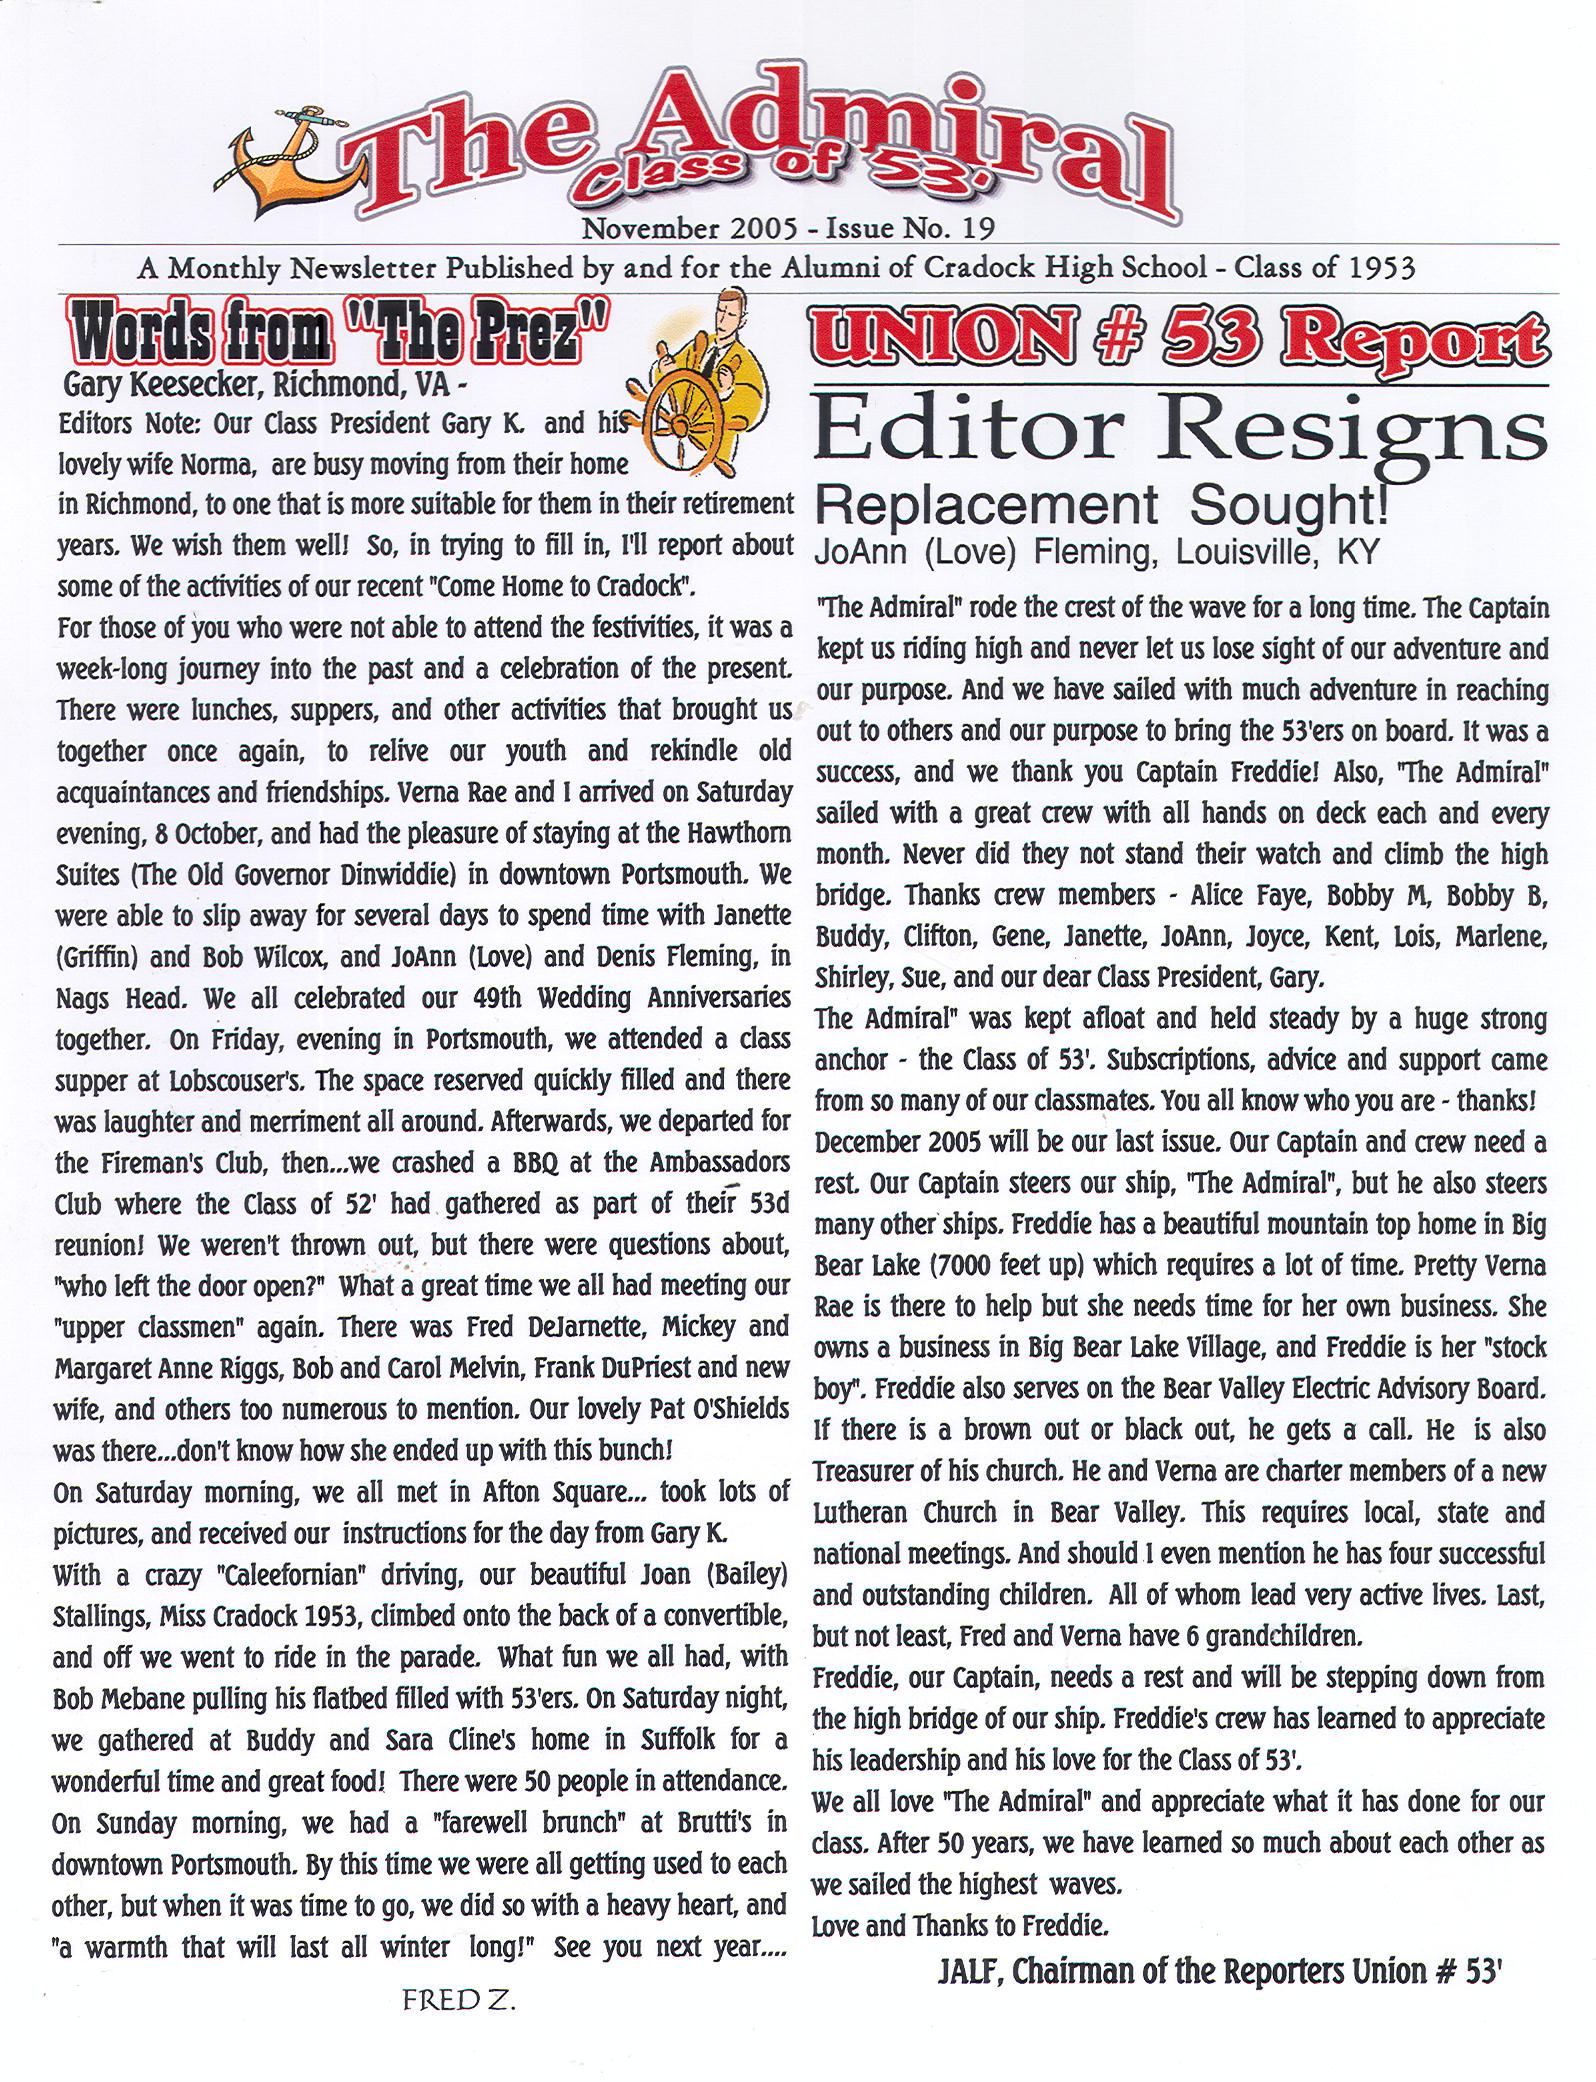 The Admiral - November 2005 - pg. 1